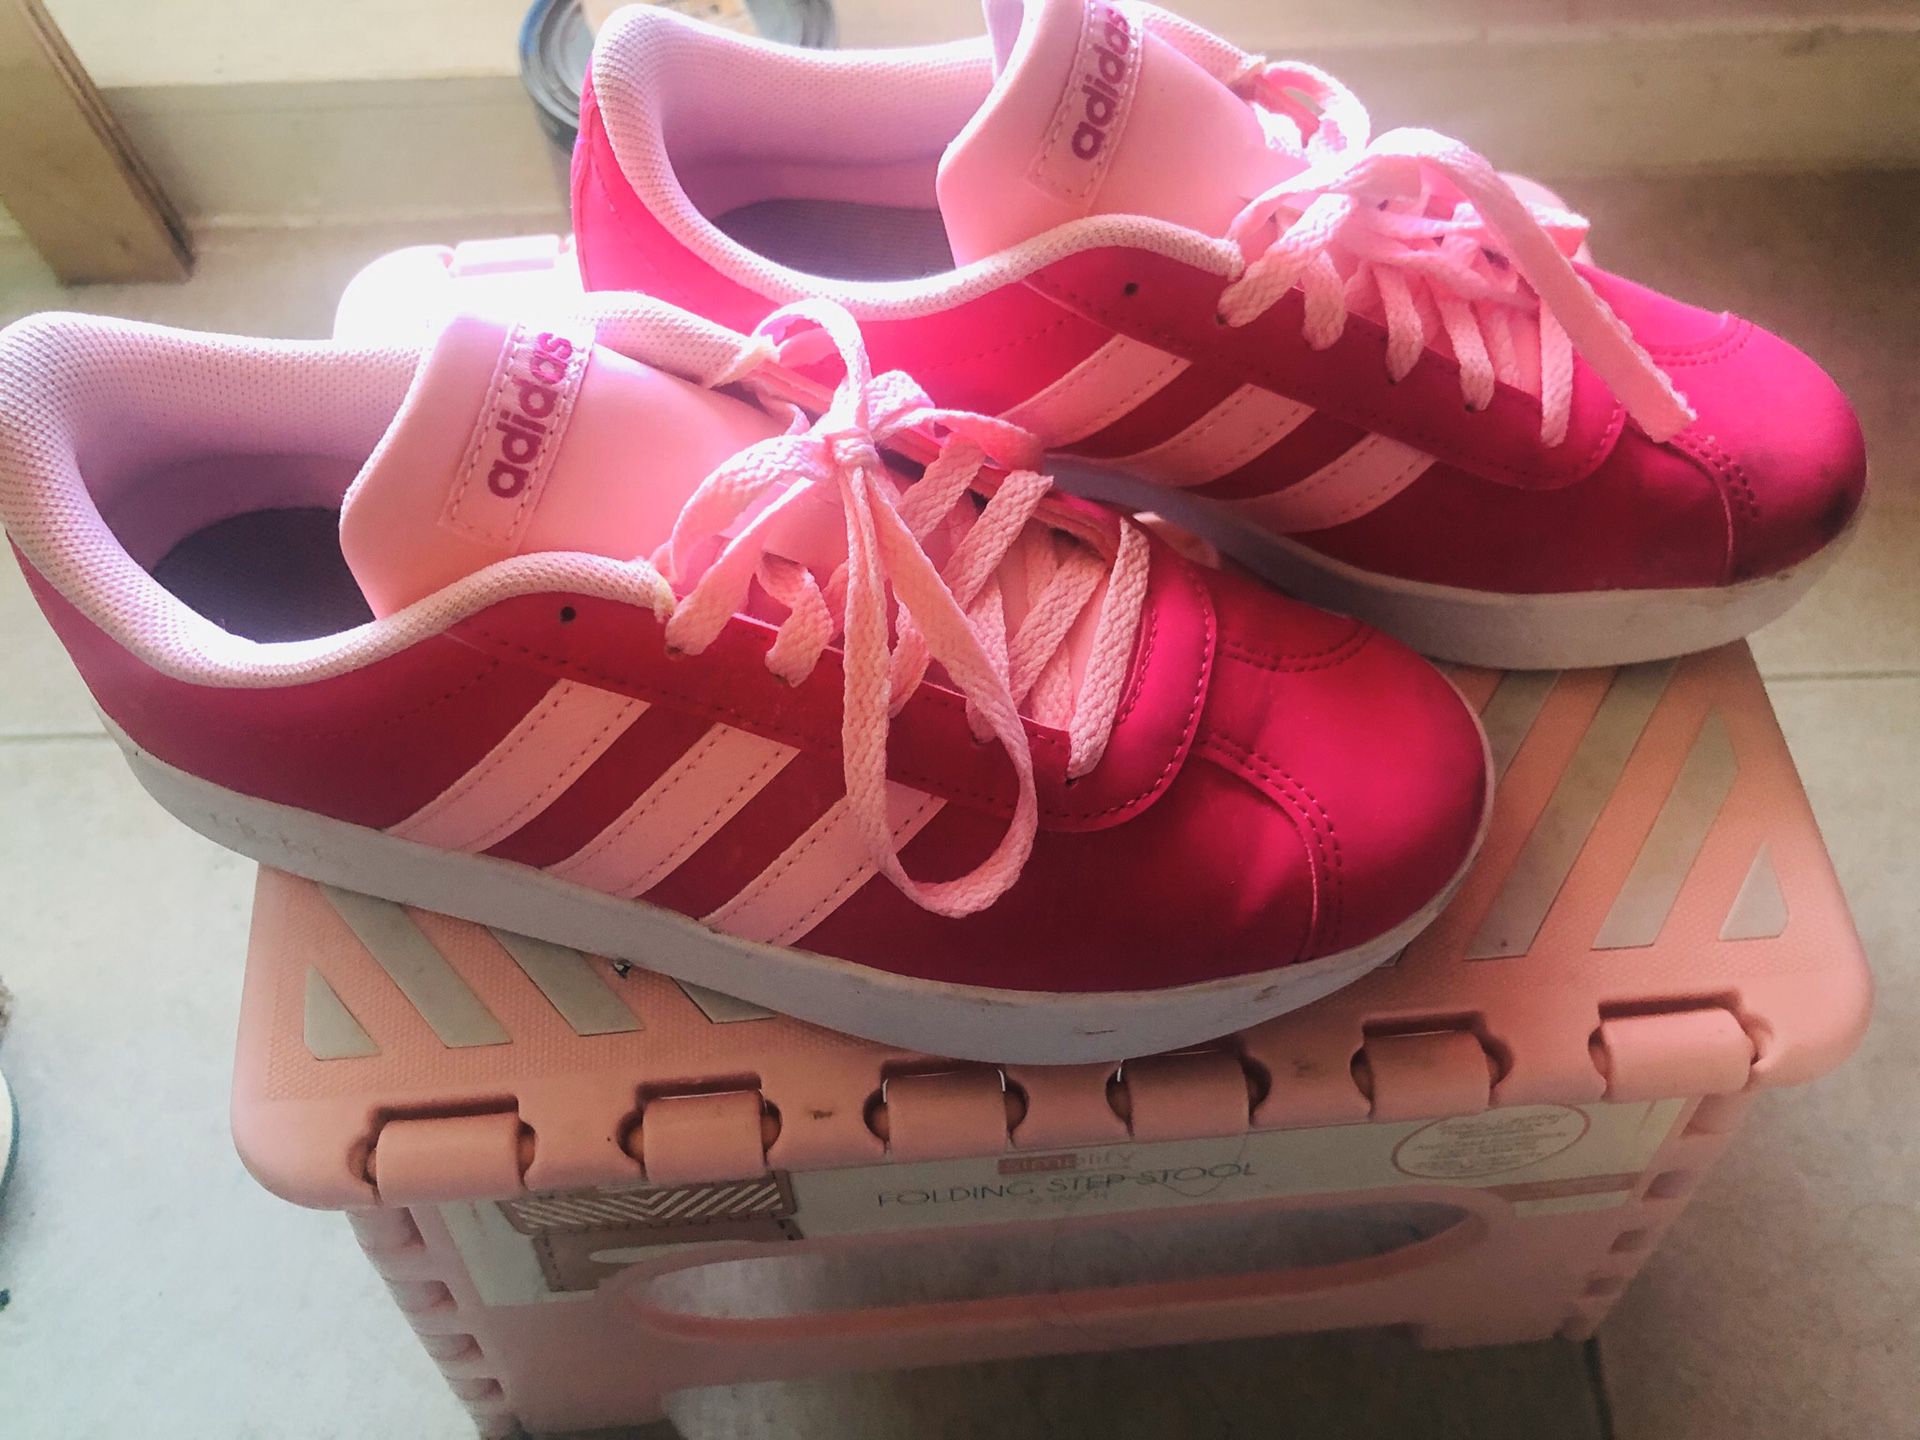 Hot pink adidas size 4